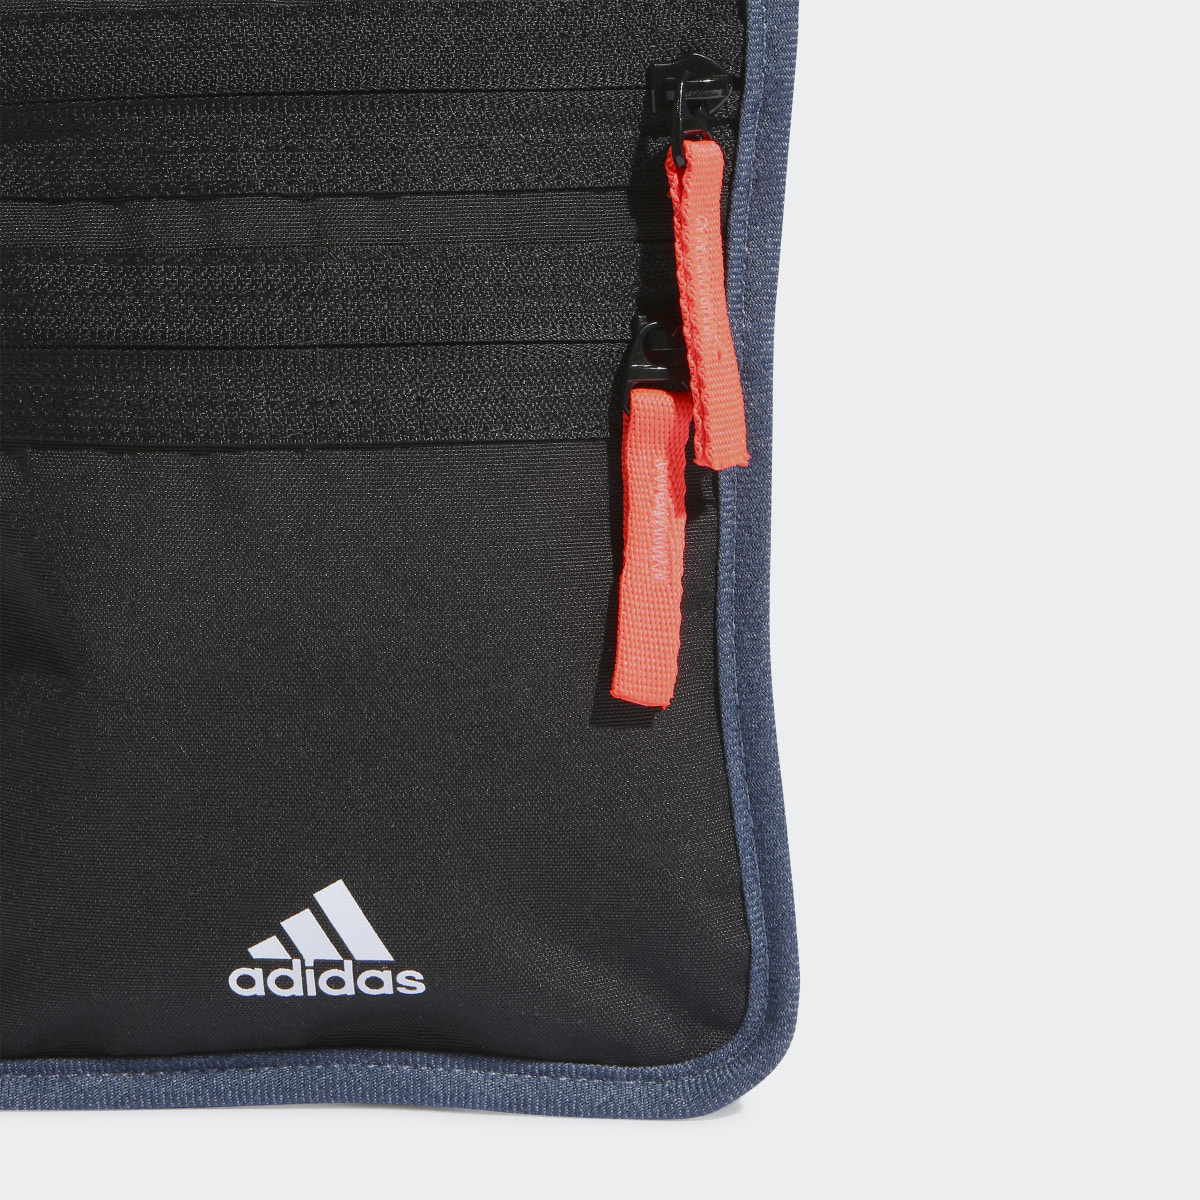 Adidas City Xplorer Mini-Bag. 6